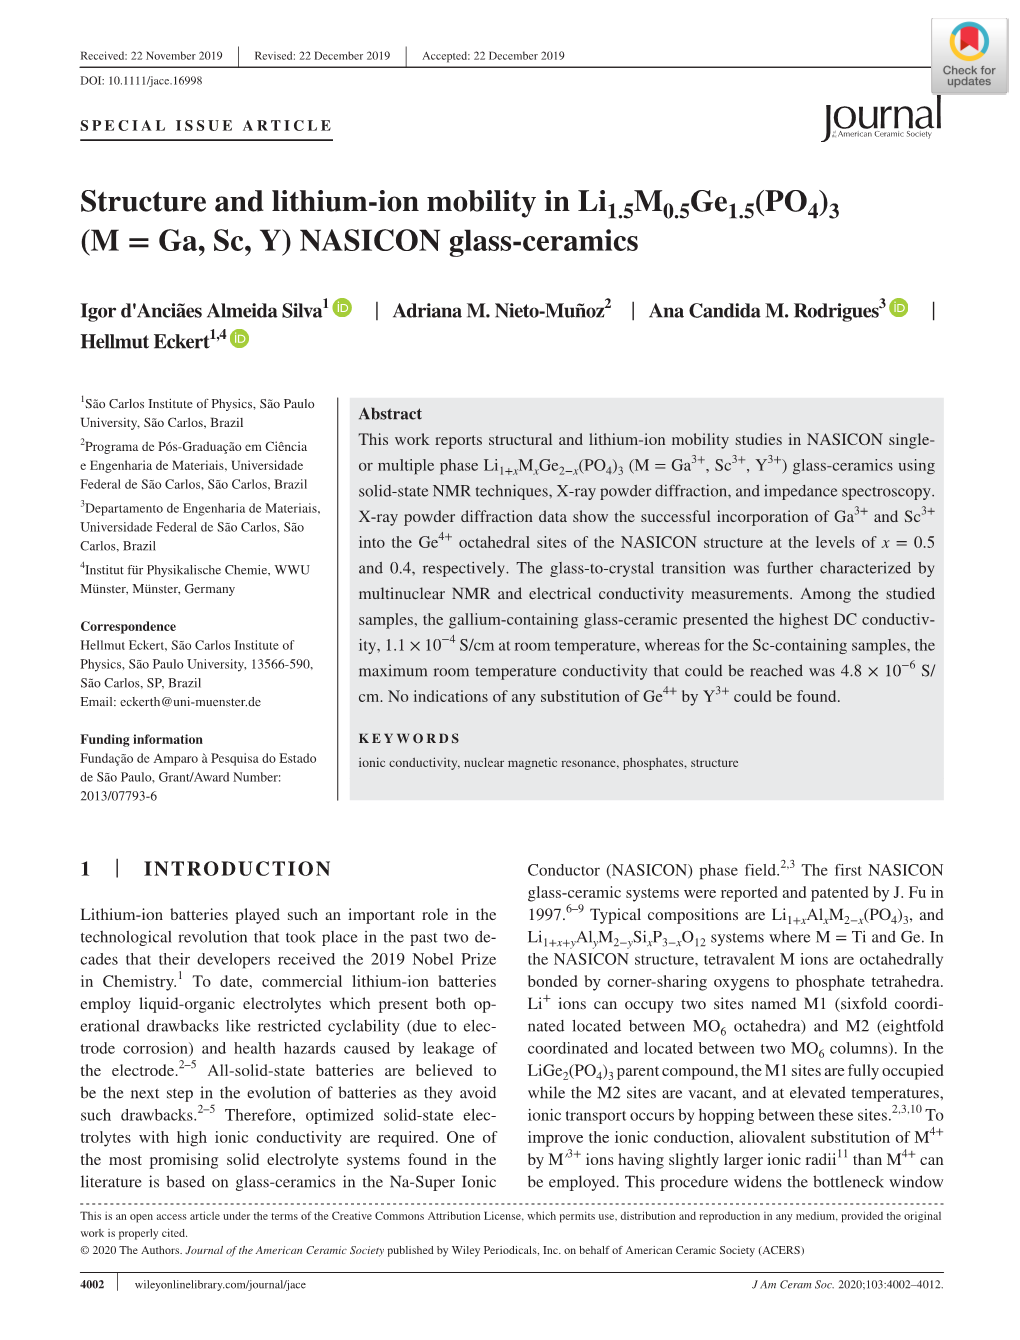 Structure and Lithium‐Ion Mobility in Li1.5M0.5Ge1.5(PO4)3 (M = Ga, Sc, Y) NASICON Glass‐Ceramics